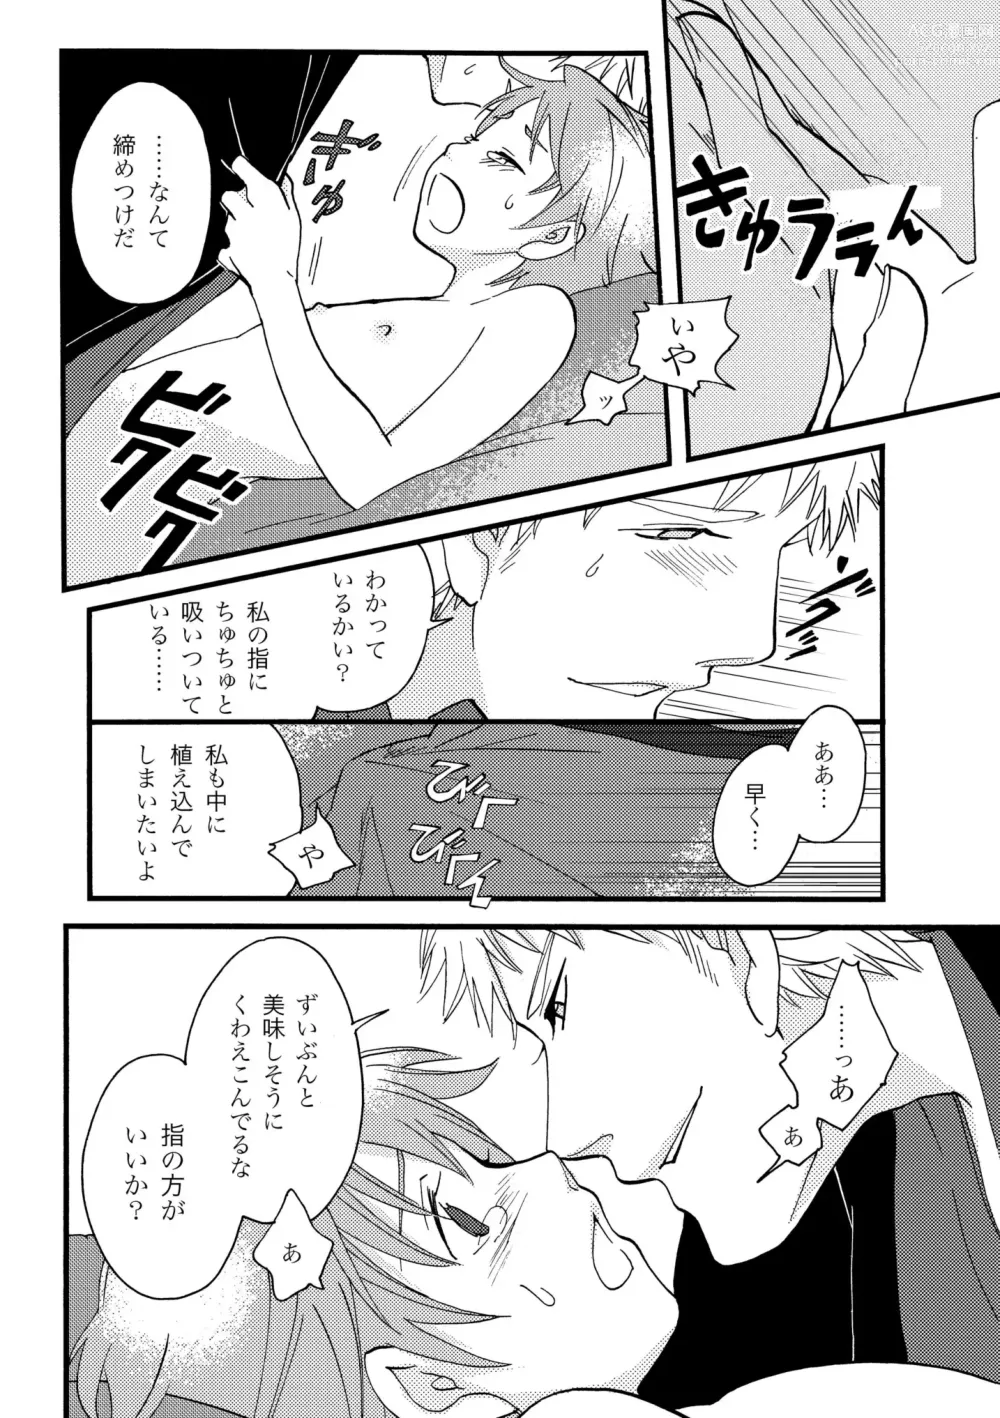 Page 48 of doujinshi Ame no Niwa